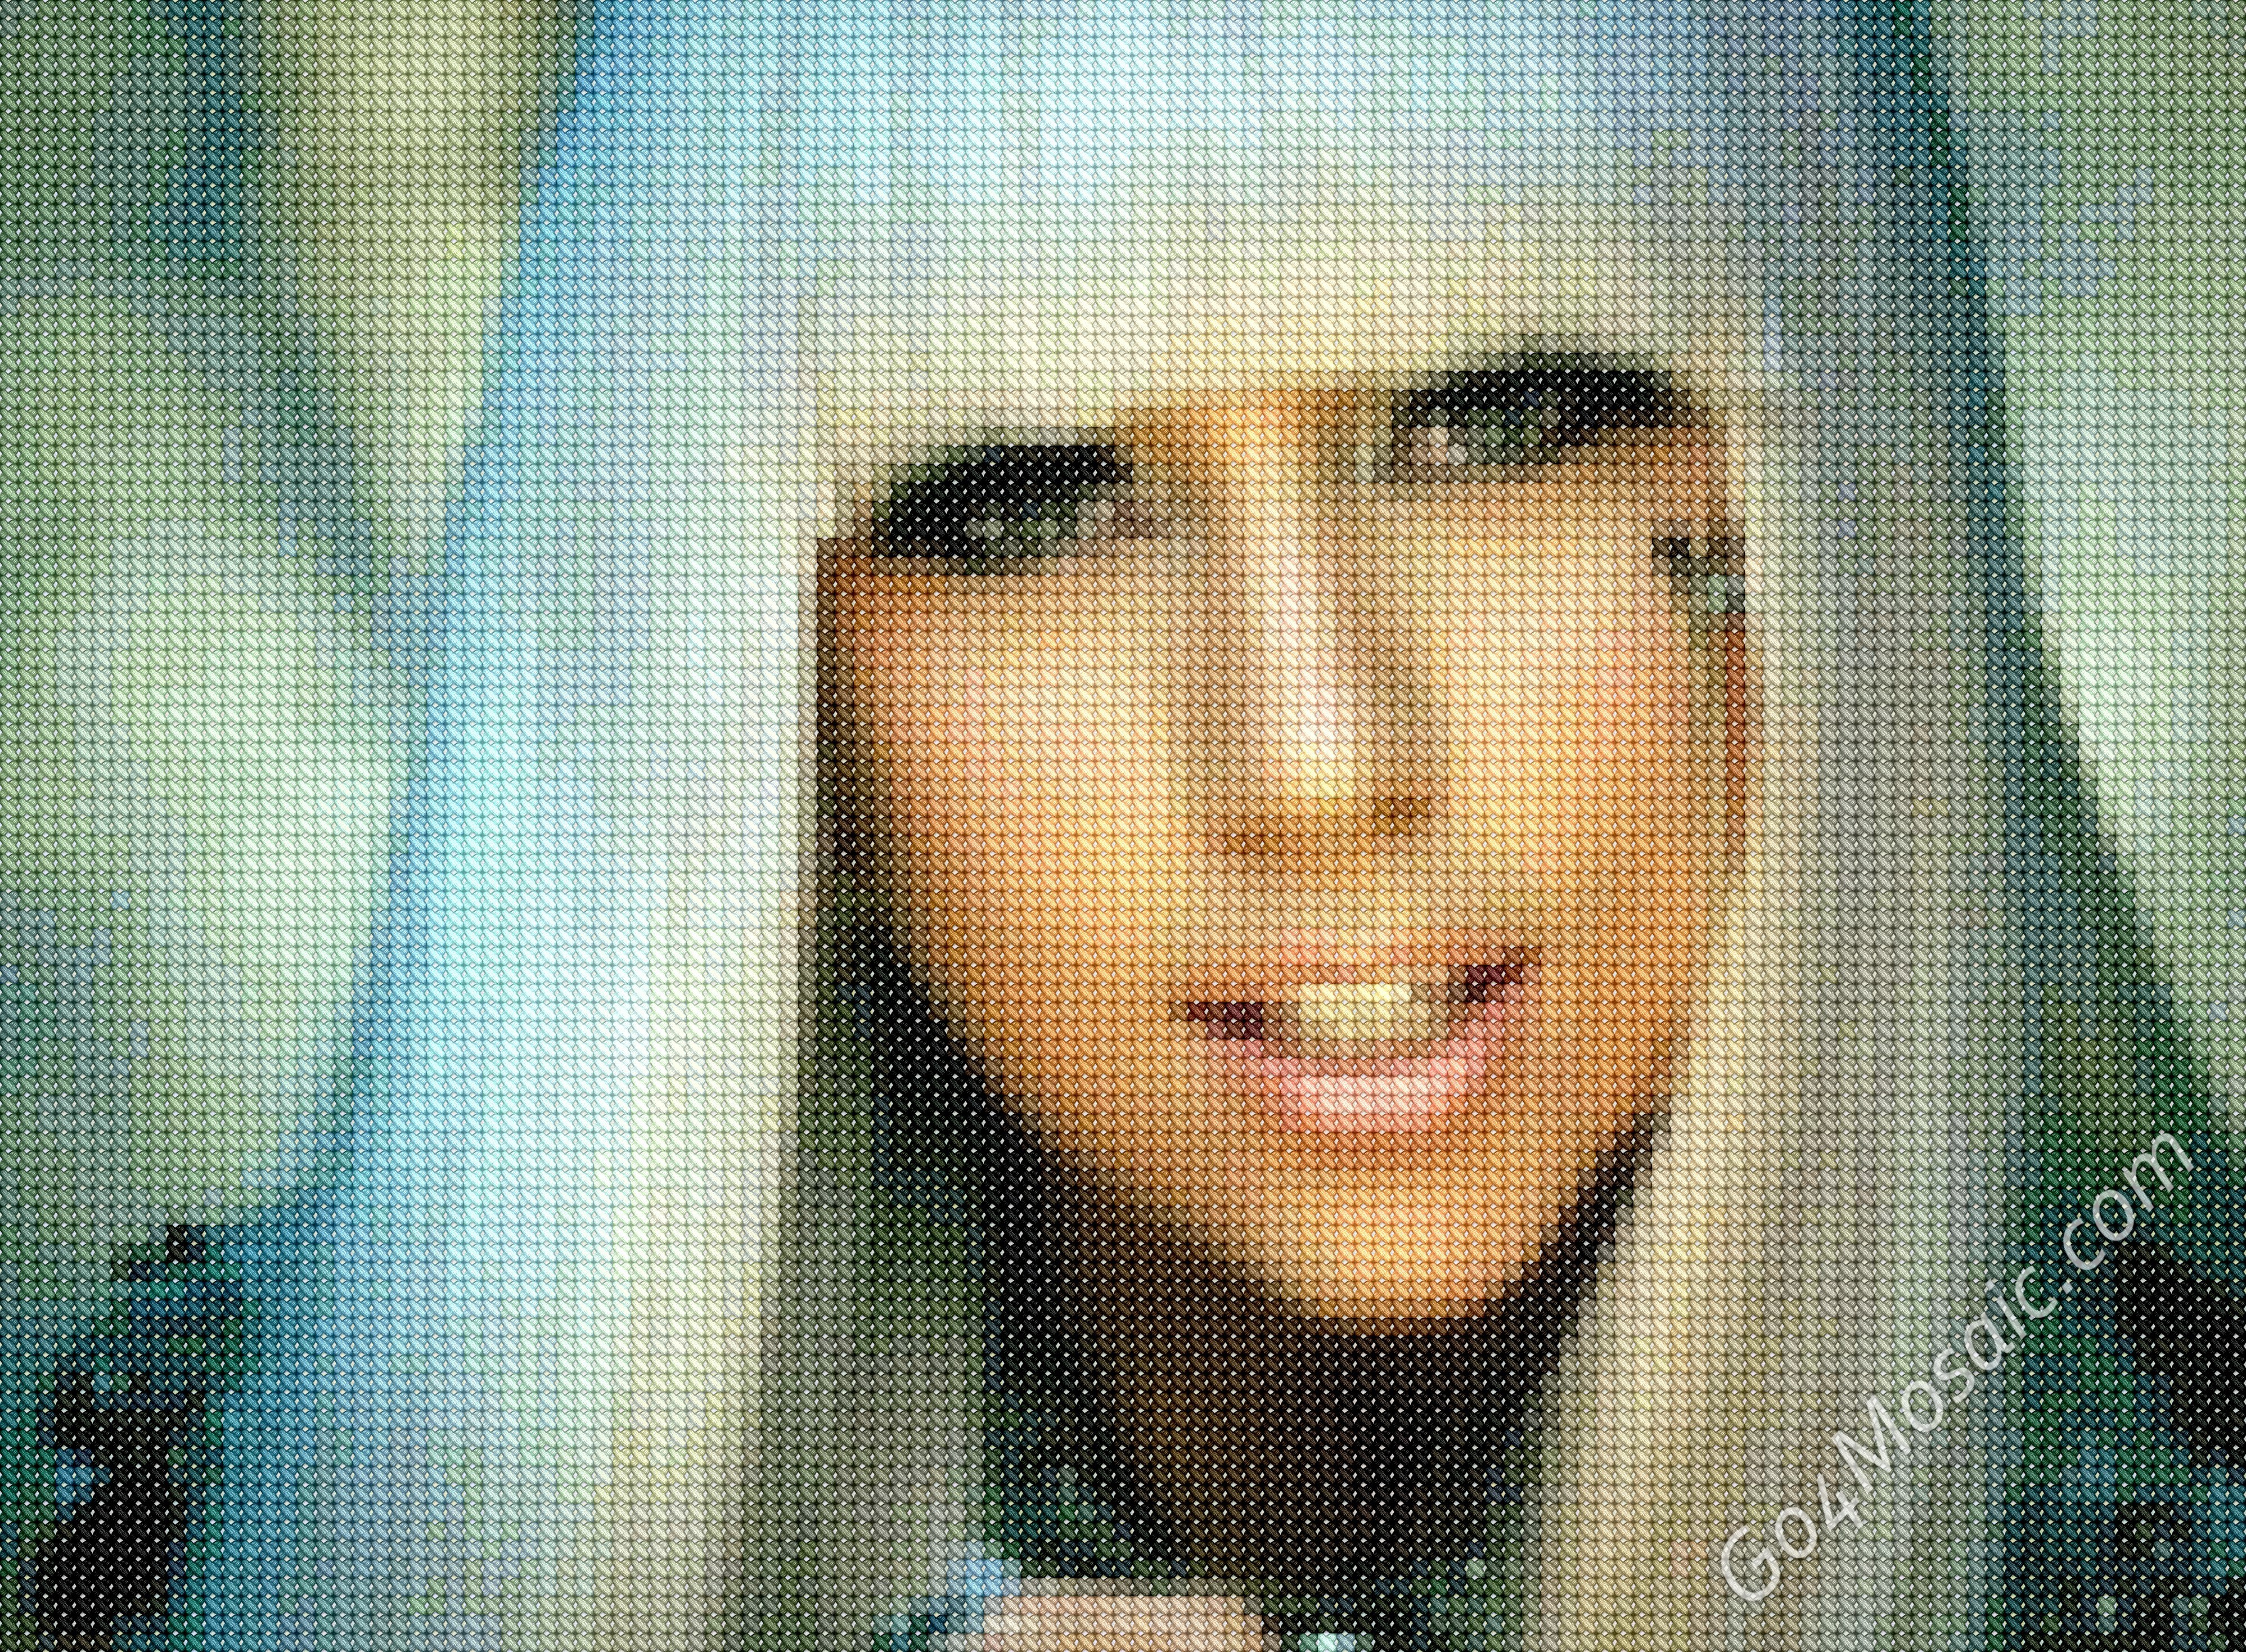 Cross-stitched Lady Gaga mosaic